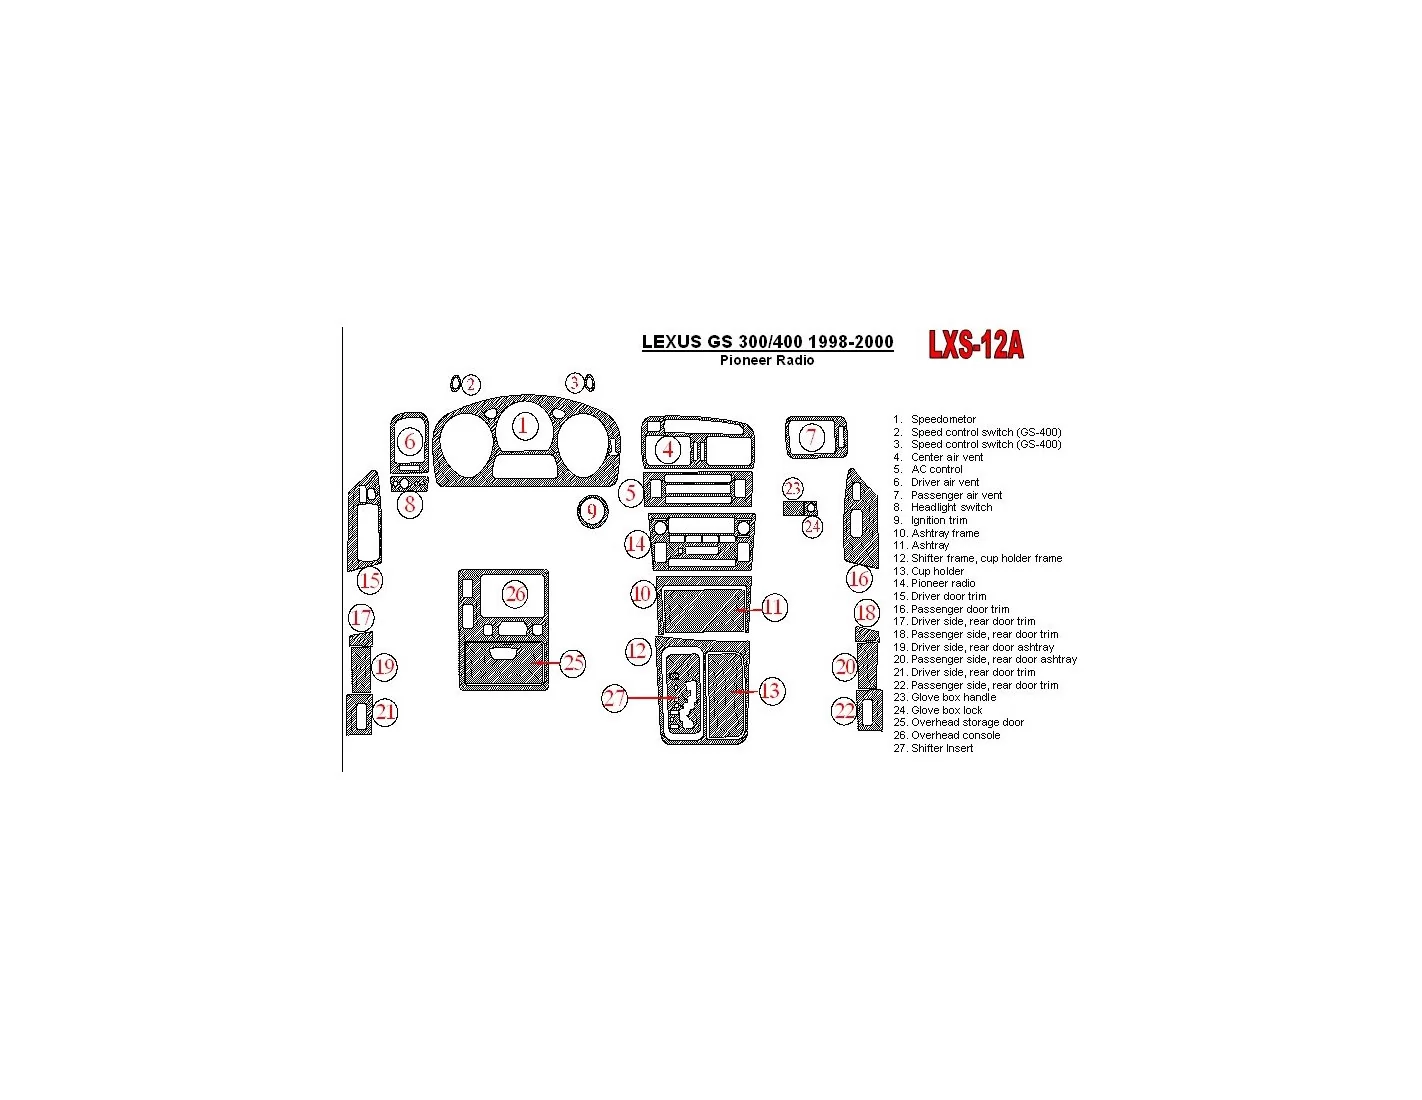 Lexus GS 1998-2000 Pioneer Radio, OEM Compliance,26 Parts set Interior BD Dash Trim Kit